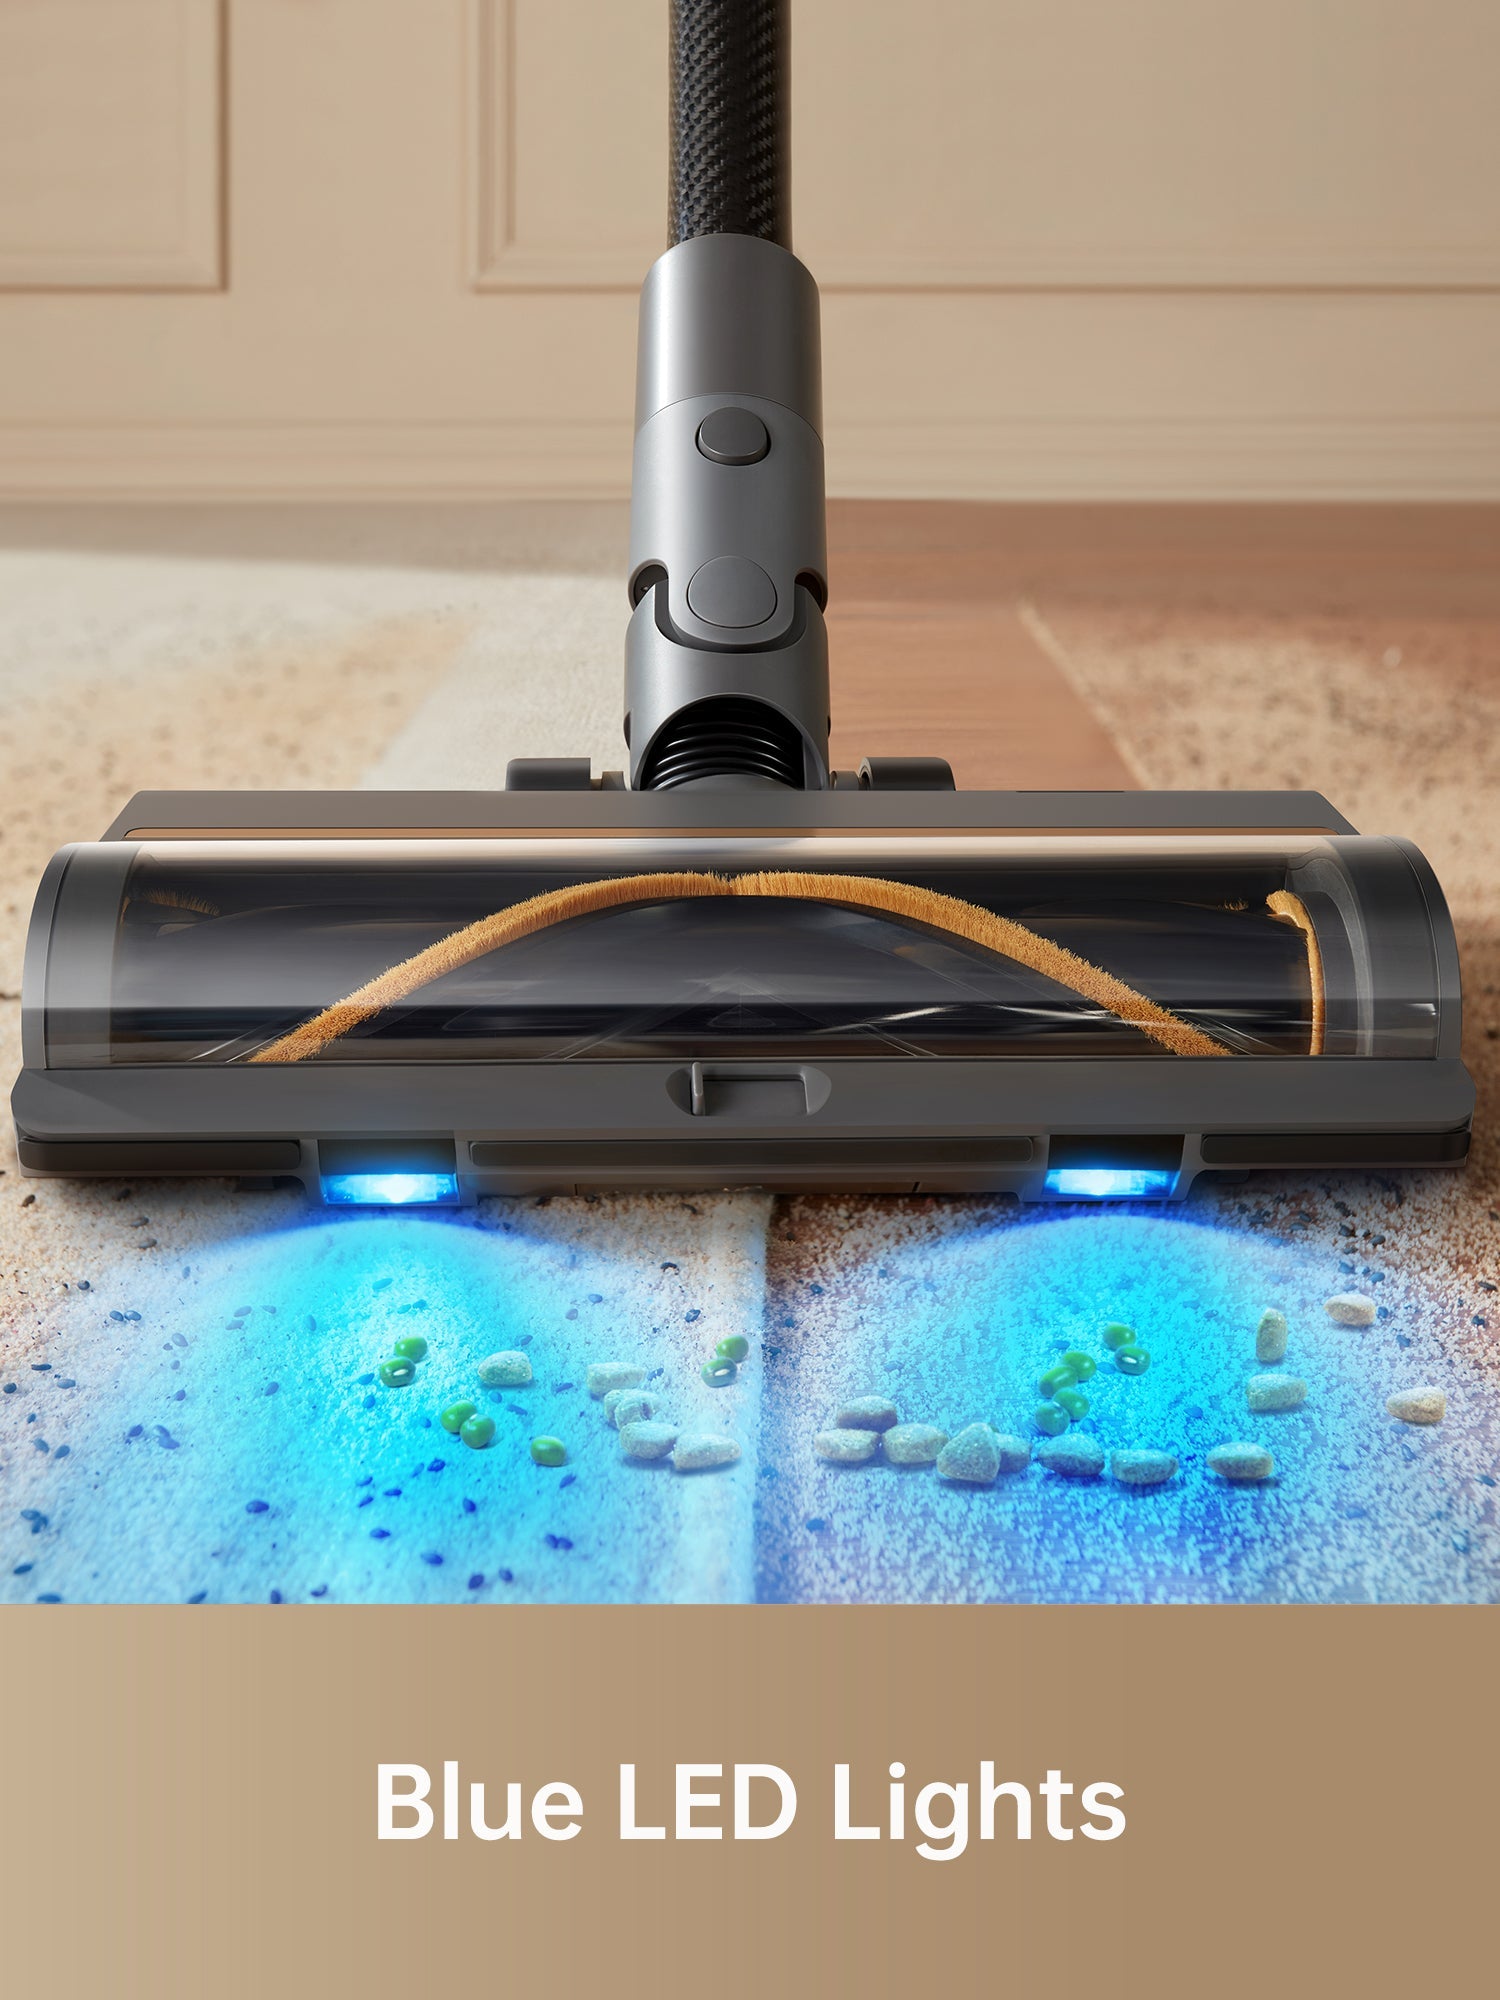 Dreame R20 Detect - Black Friday Killer Deal Cordless Vacuum 